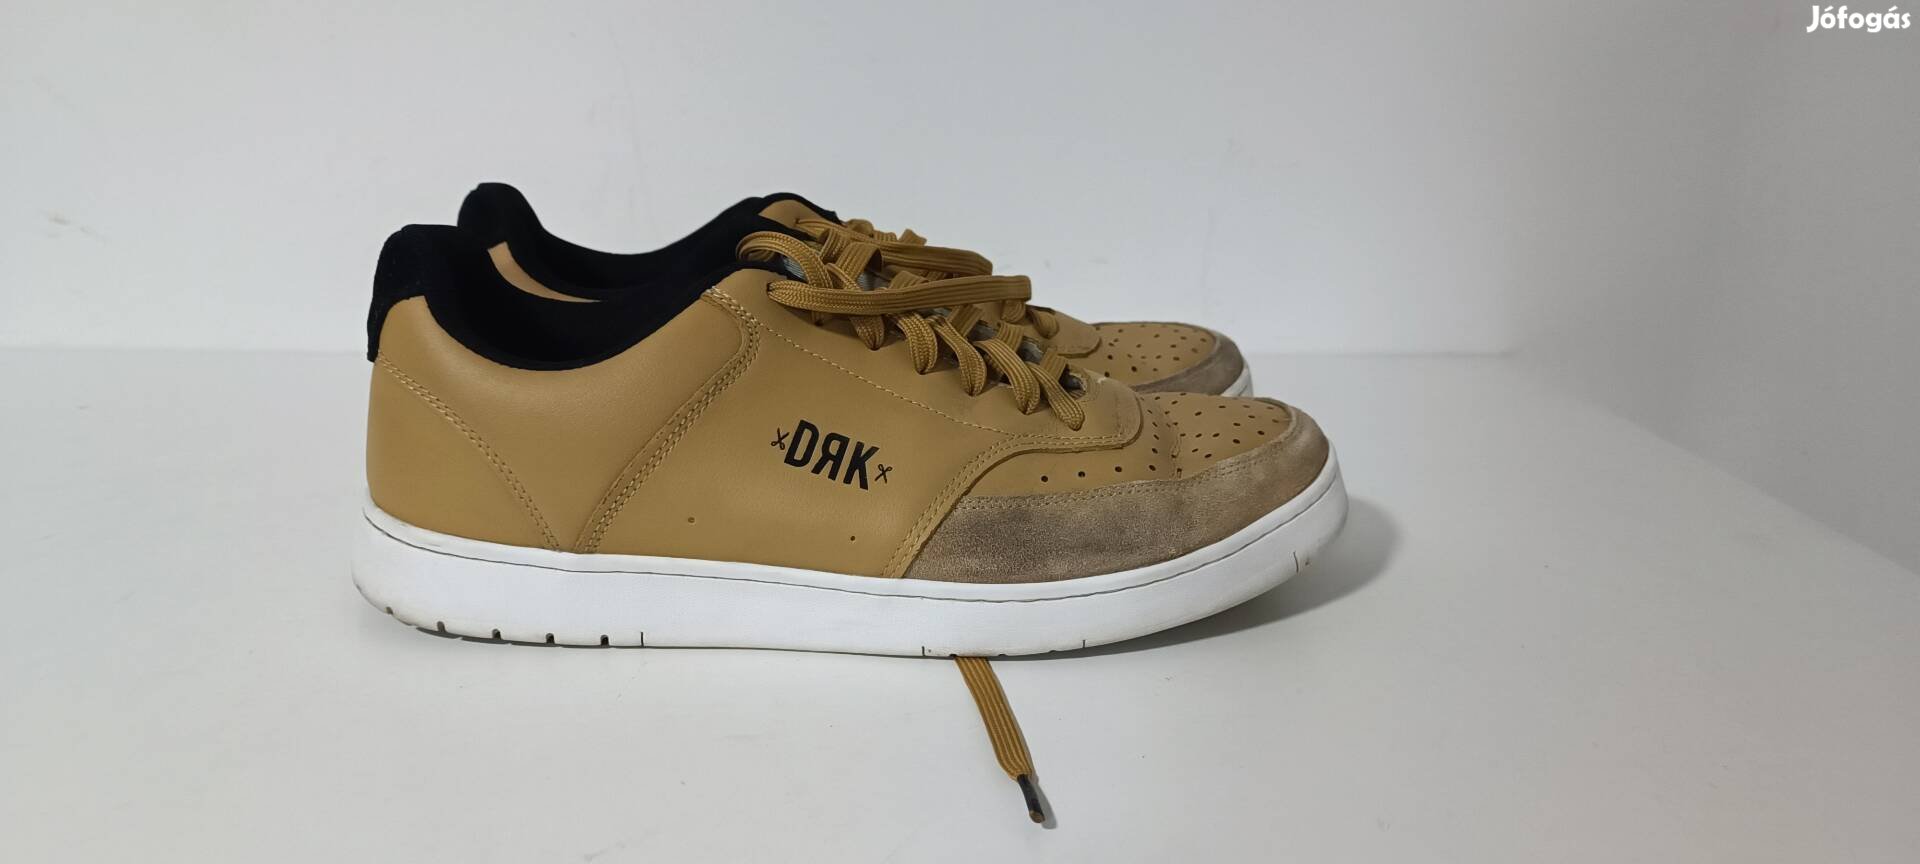 DRK Dorko férfi sportcipő eur45 méret 